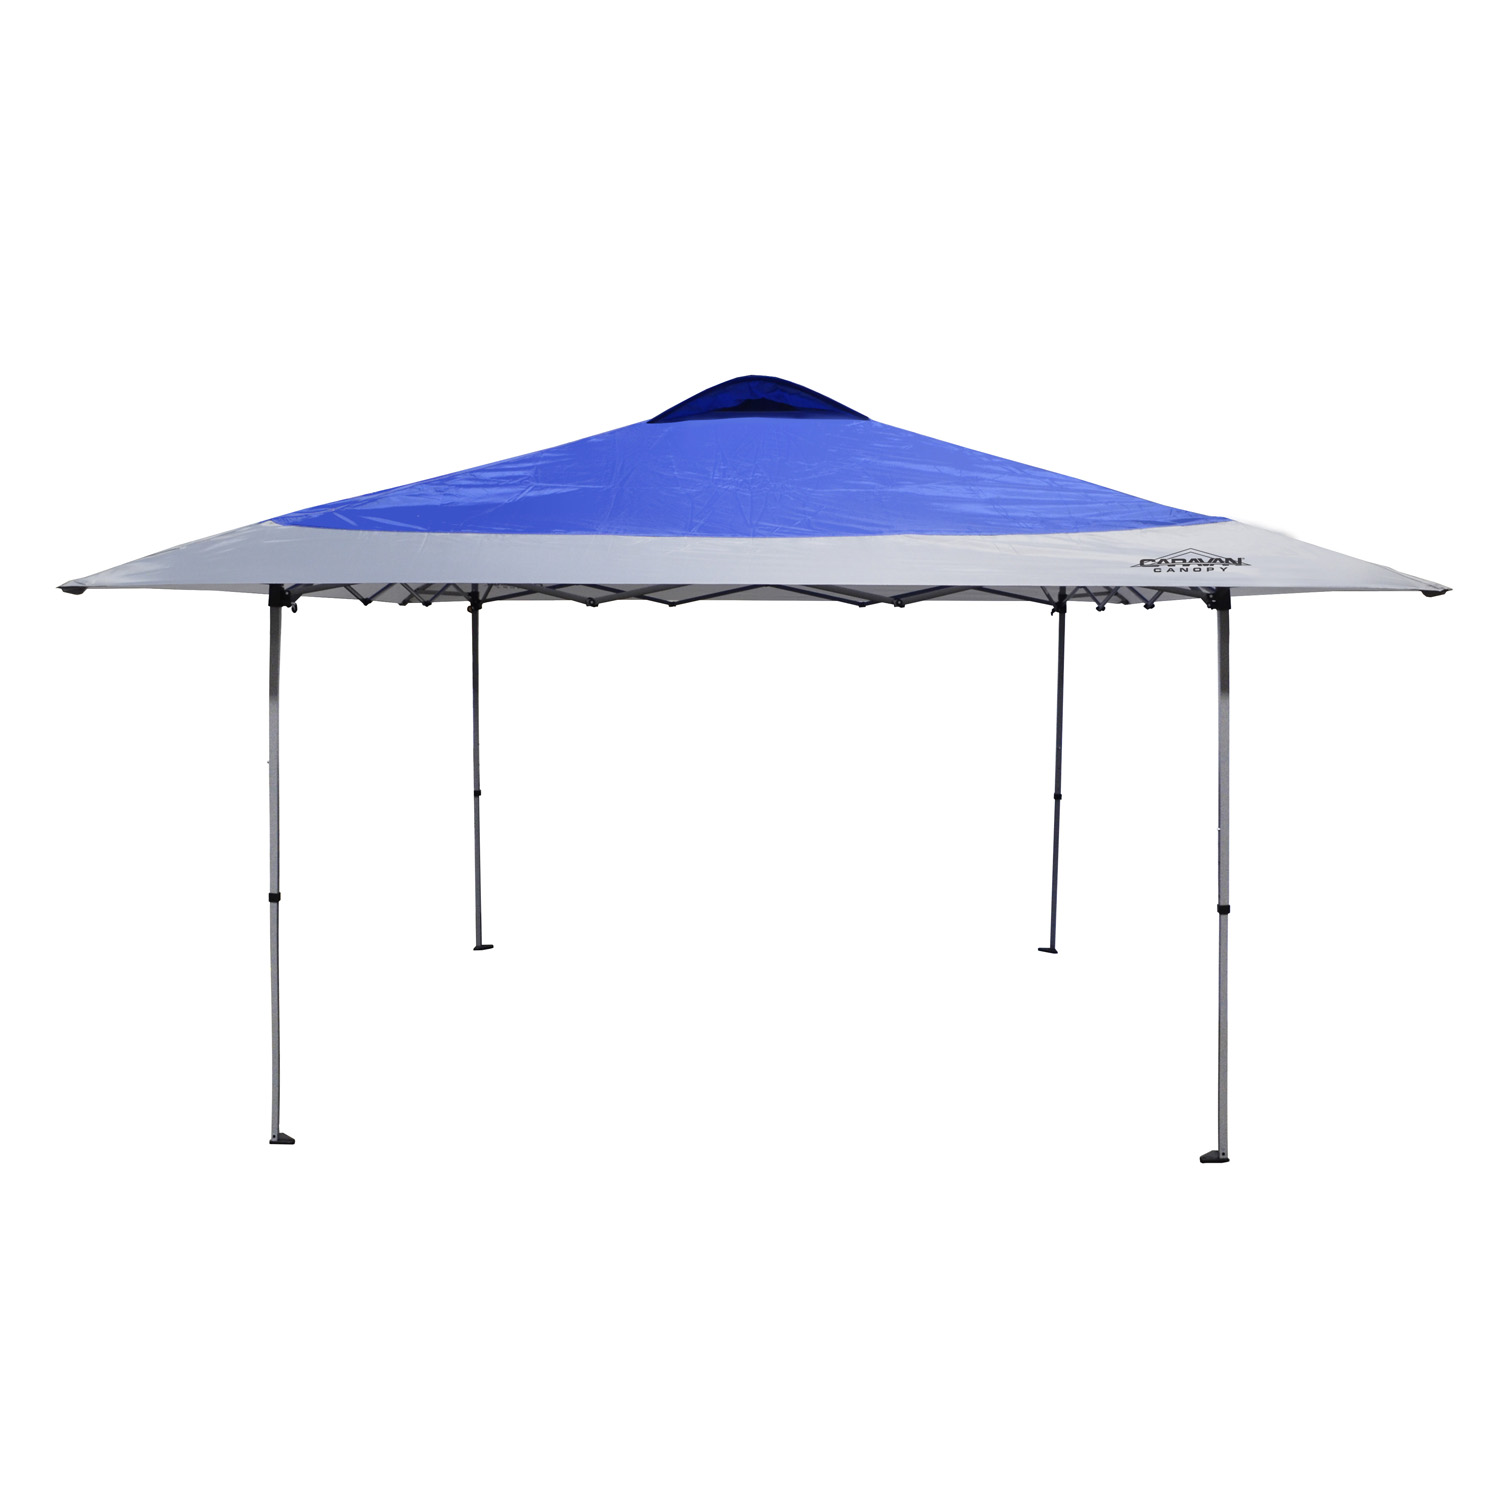 Blue Caravan Canopy Haven Sport 12 x 12 Foot Folding Instant Shade Canopy Tent 